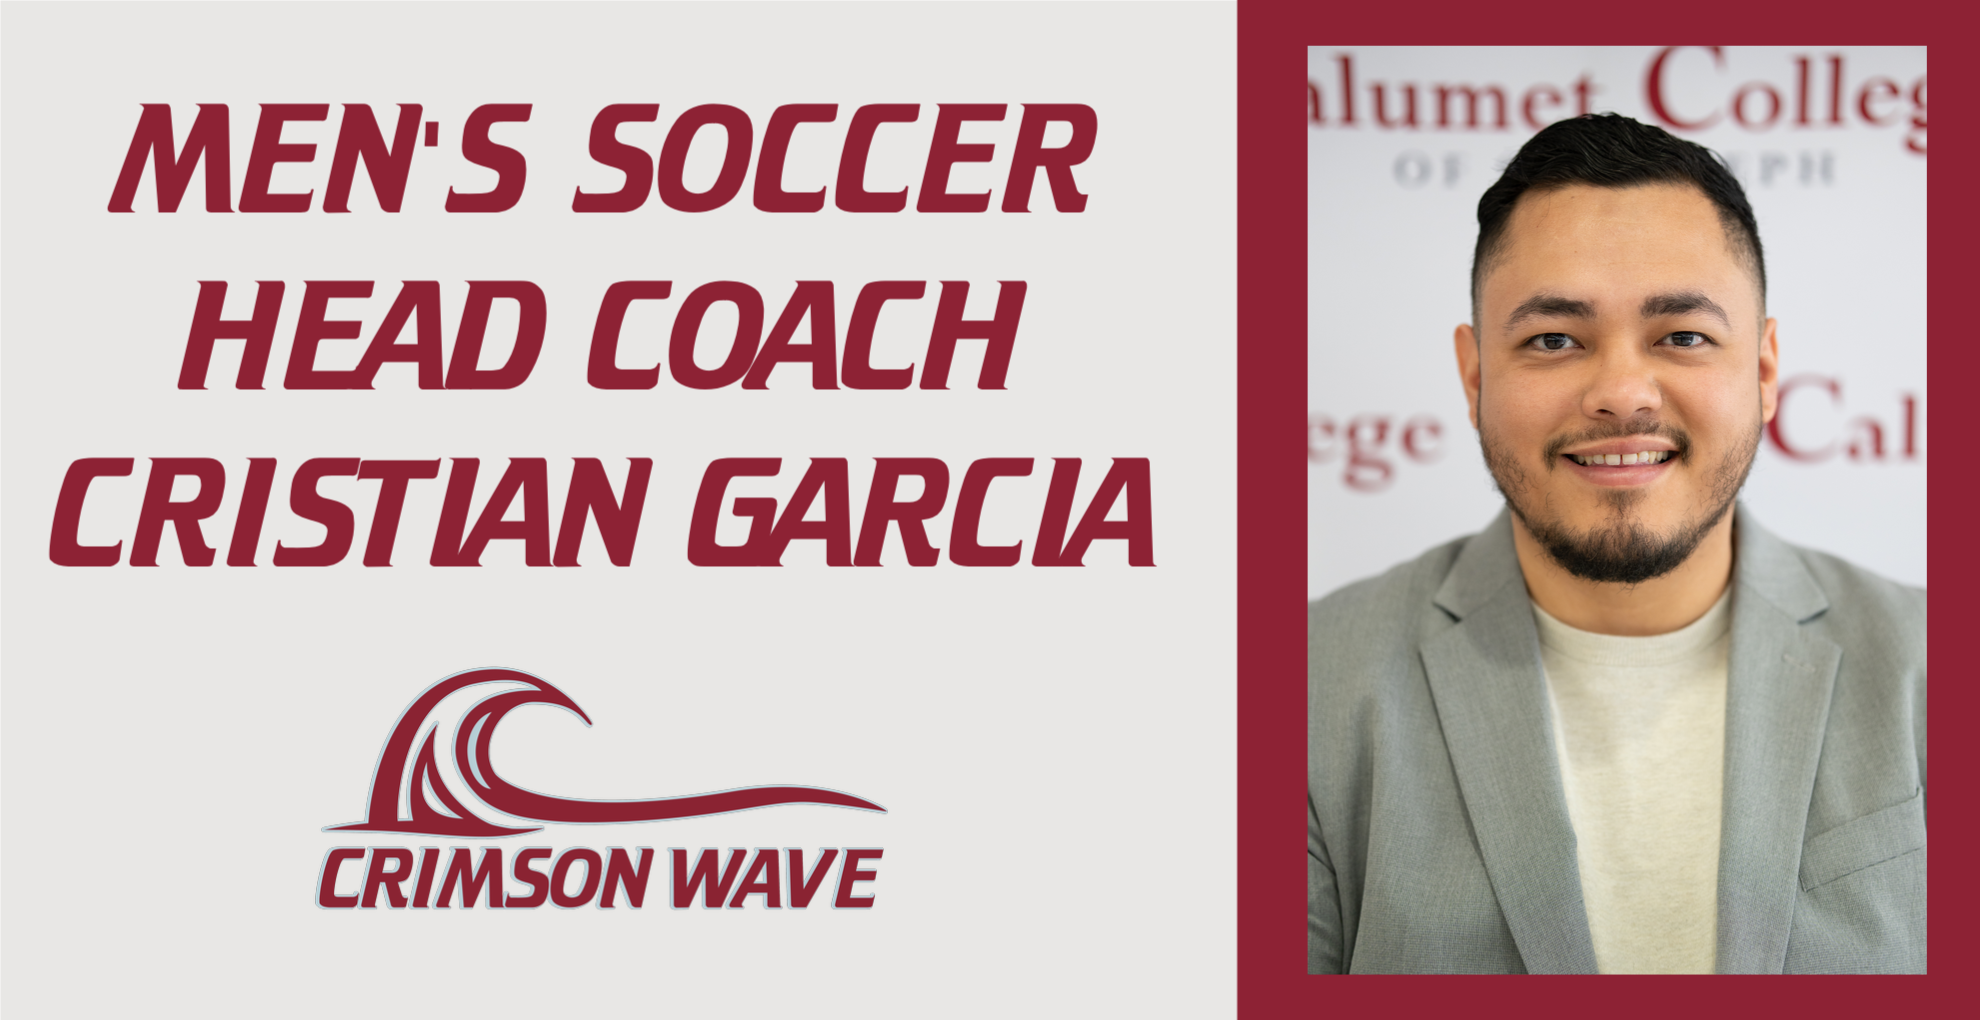 Garcia named CCSJ Men’s Soccer Head Coach